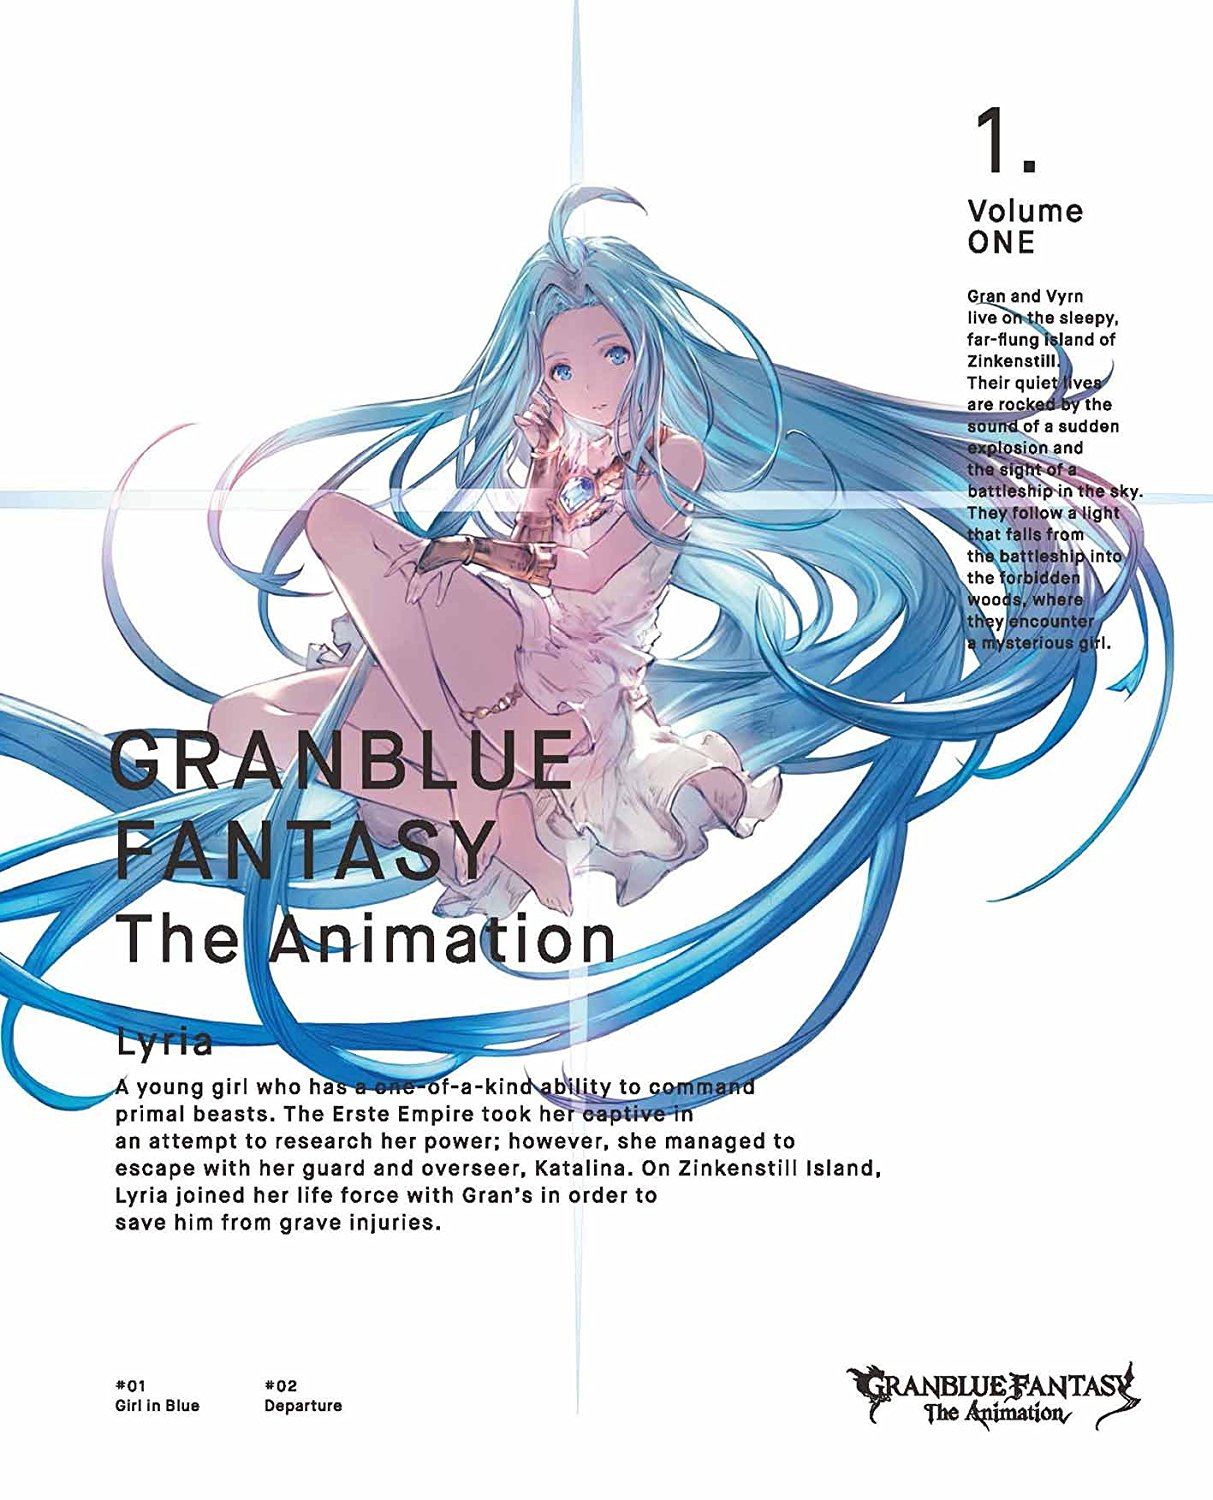 Granblue Fantasy: The Animation: Season 1 (2017) — The Movie